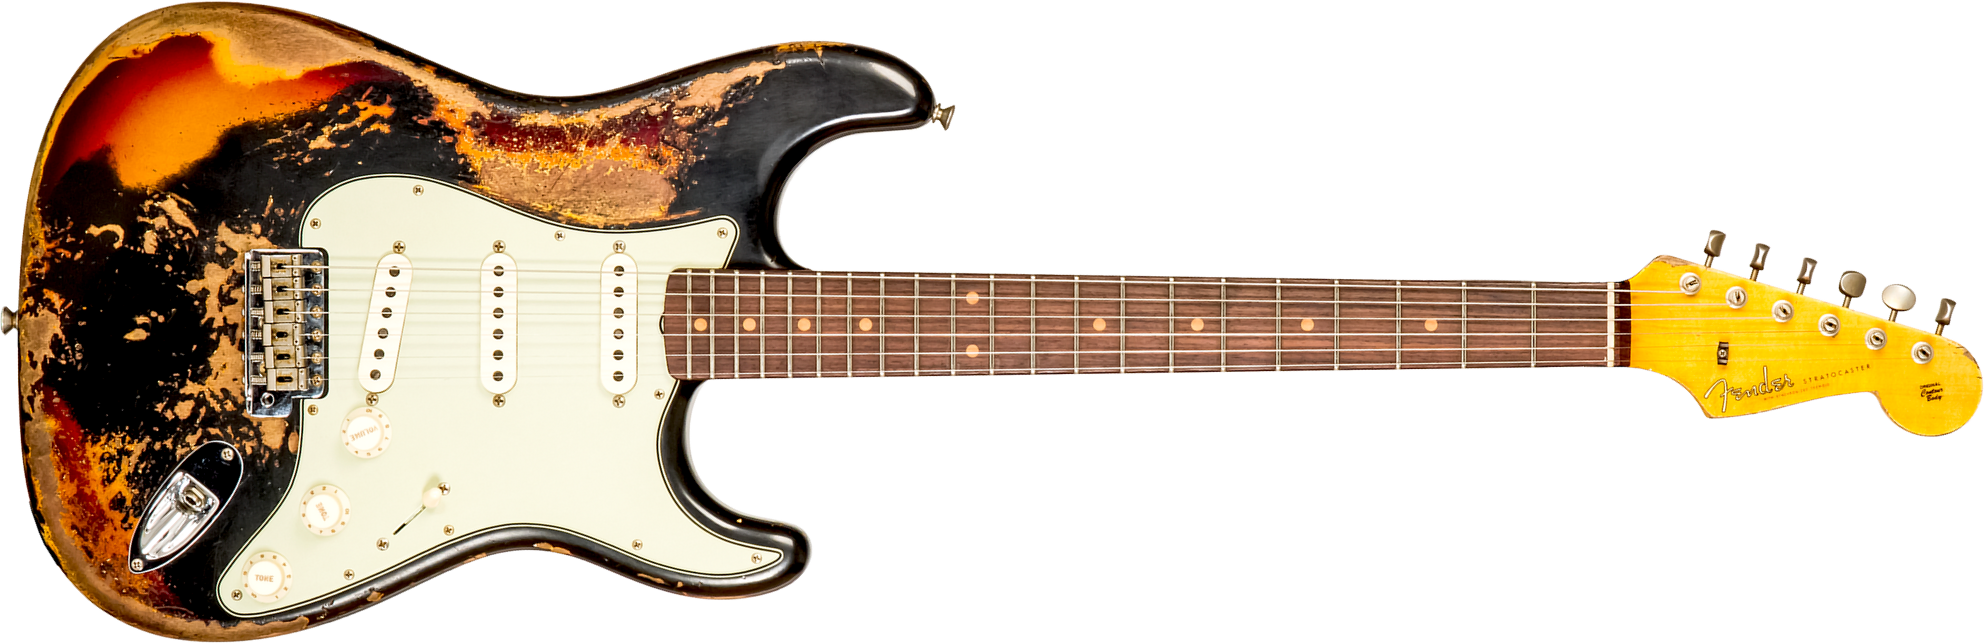 Fender Custom Shop Strat 1959 3s Trem Rw #cz576154 - Super Heavy Relic Black O. 3-color Sunburst - E-Gitarre in Str-Form - Main picture